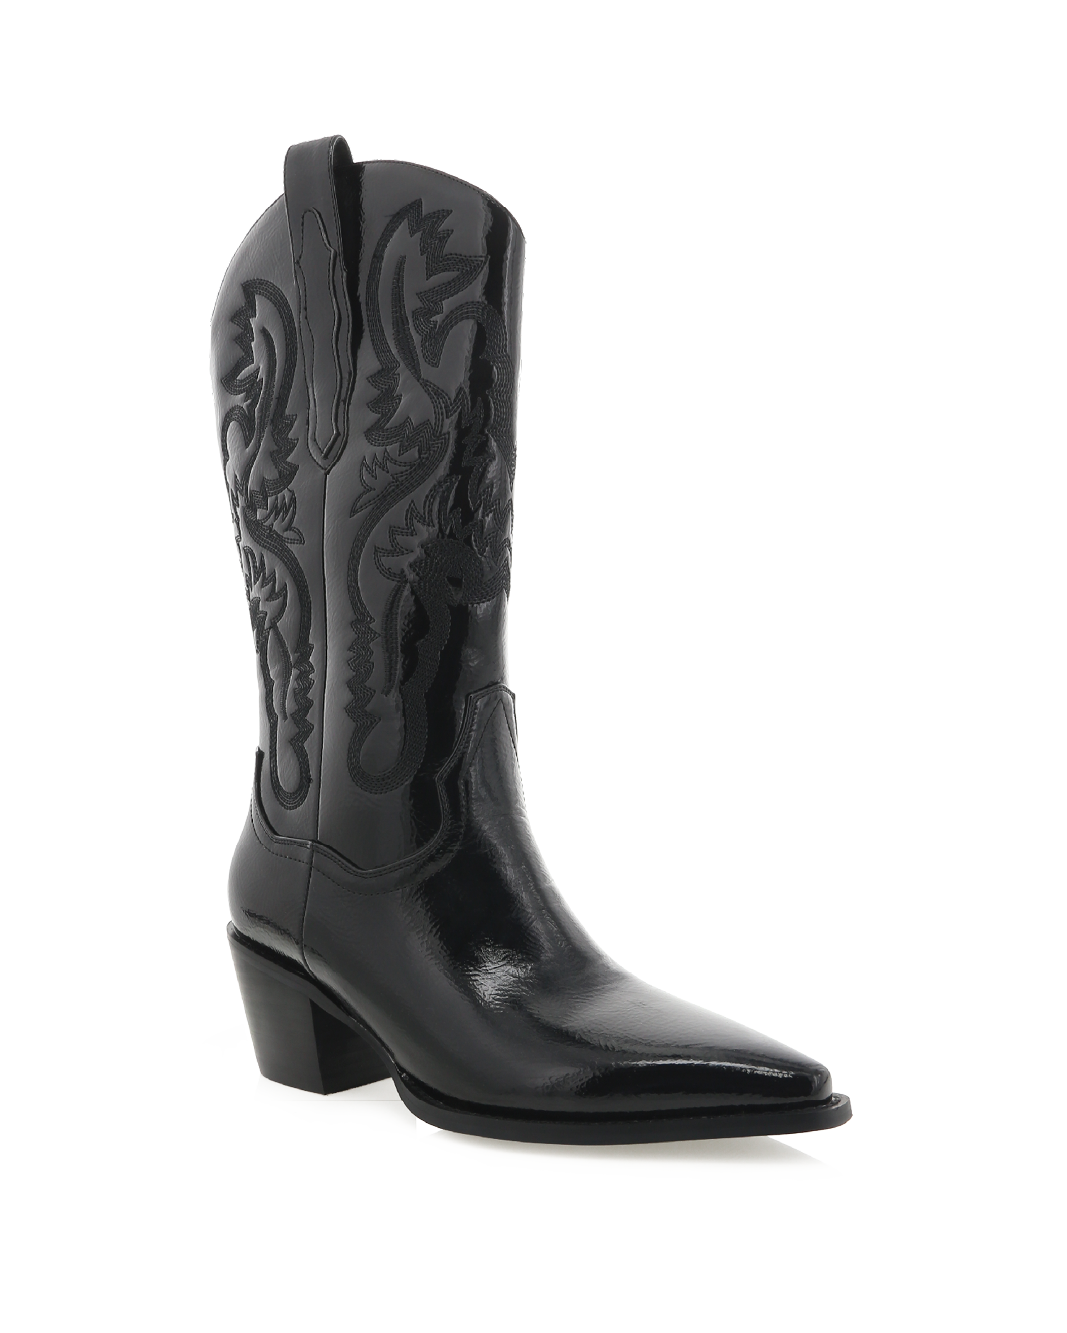 DANILO - BLACK CRINKLE PATENT-Boots-Billini-BILLINI USA